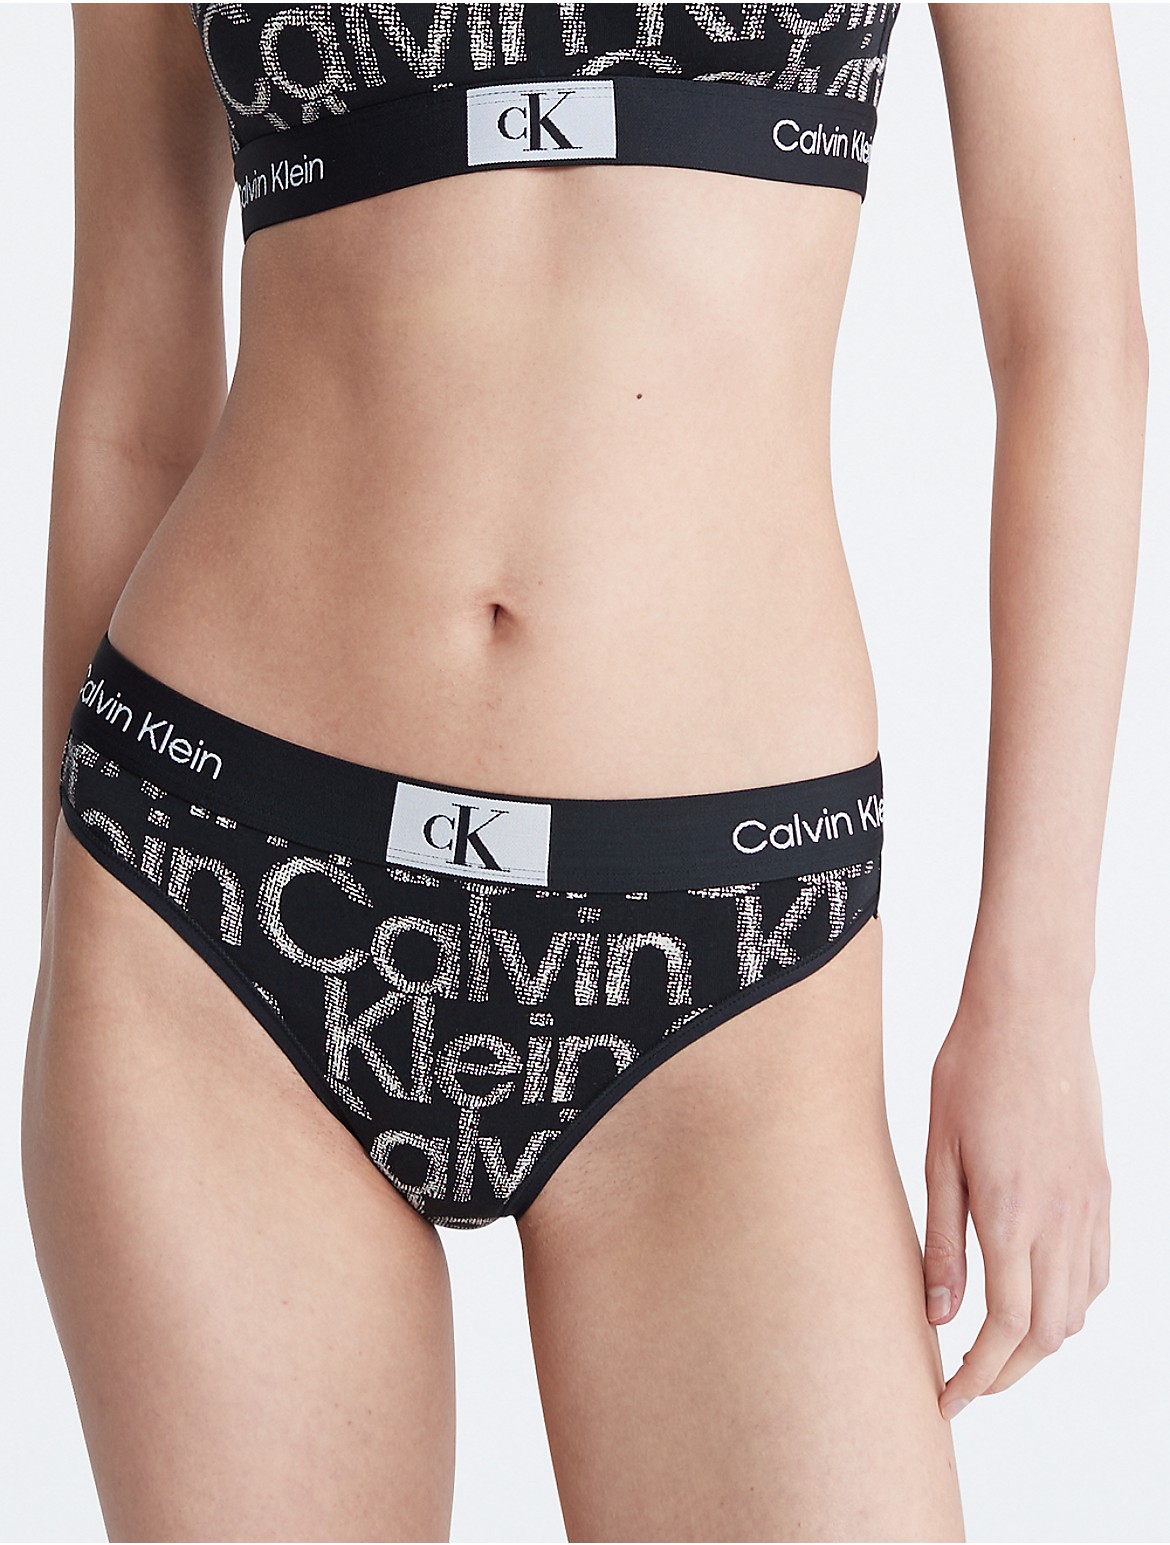 CK Black Graphic Lace Bikini